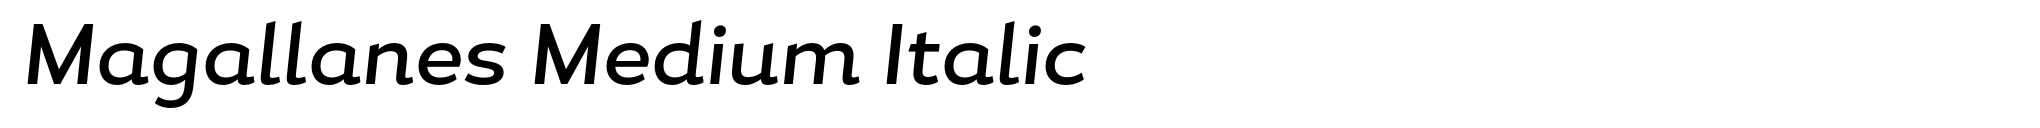 Magallanes Medium Italic image